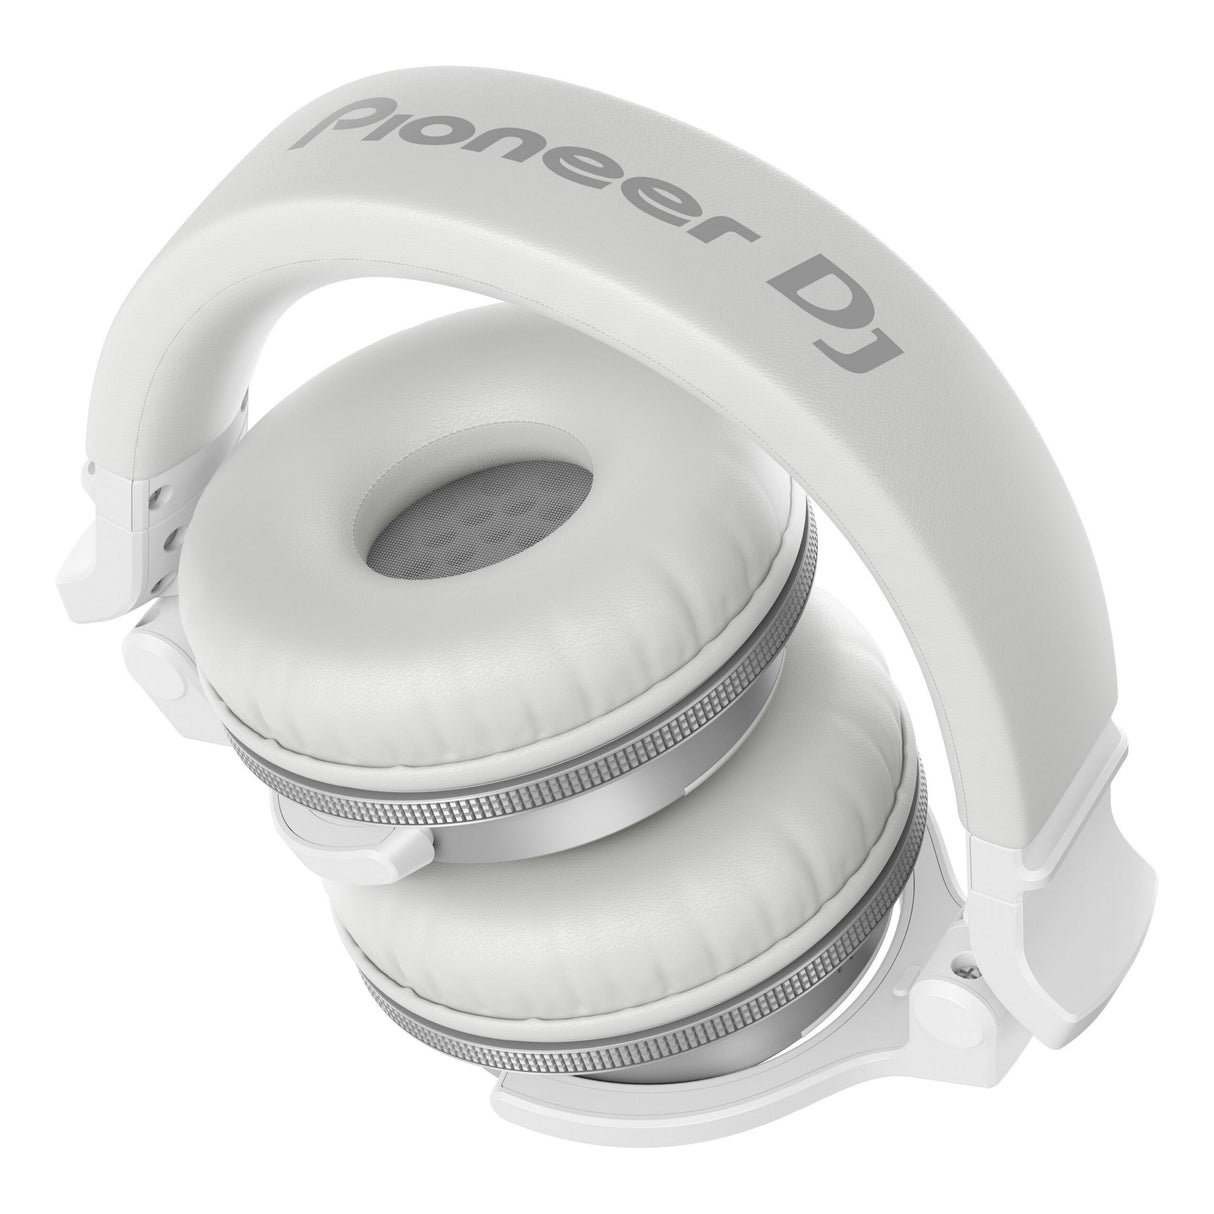 Pioneer DJ HDJ-CUE1BT-W On-Ear DJ Bluetooth Headphone, White